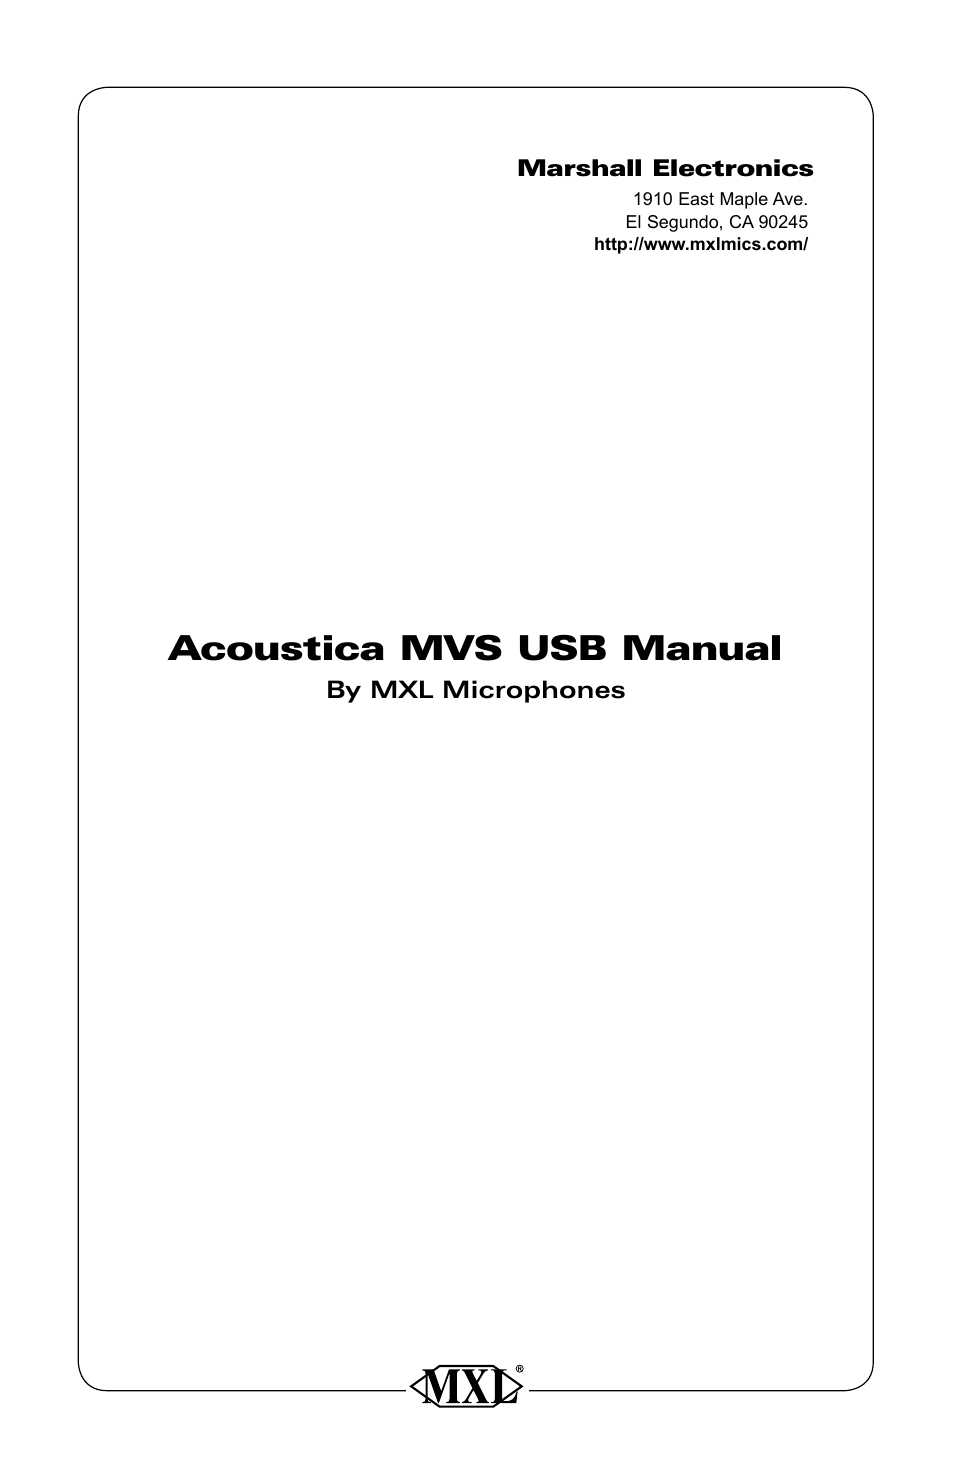 Acoustica MVS